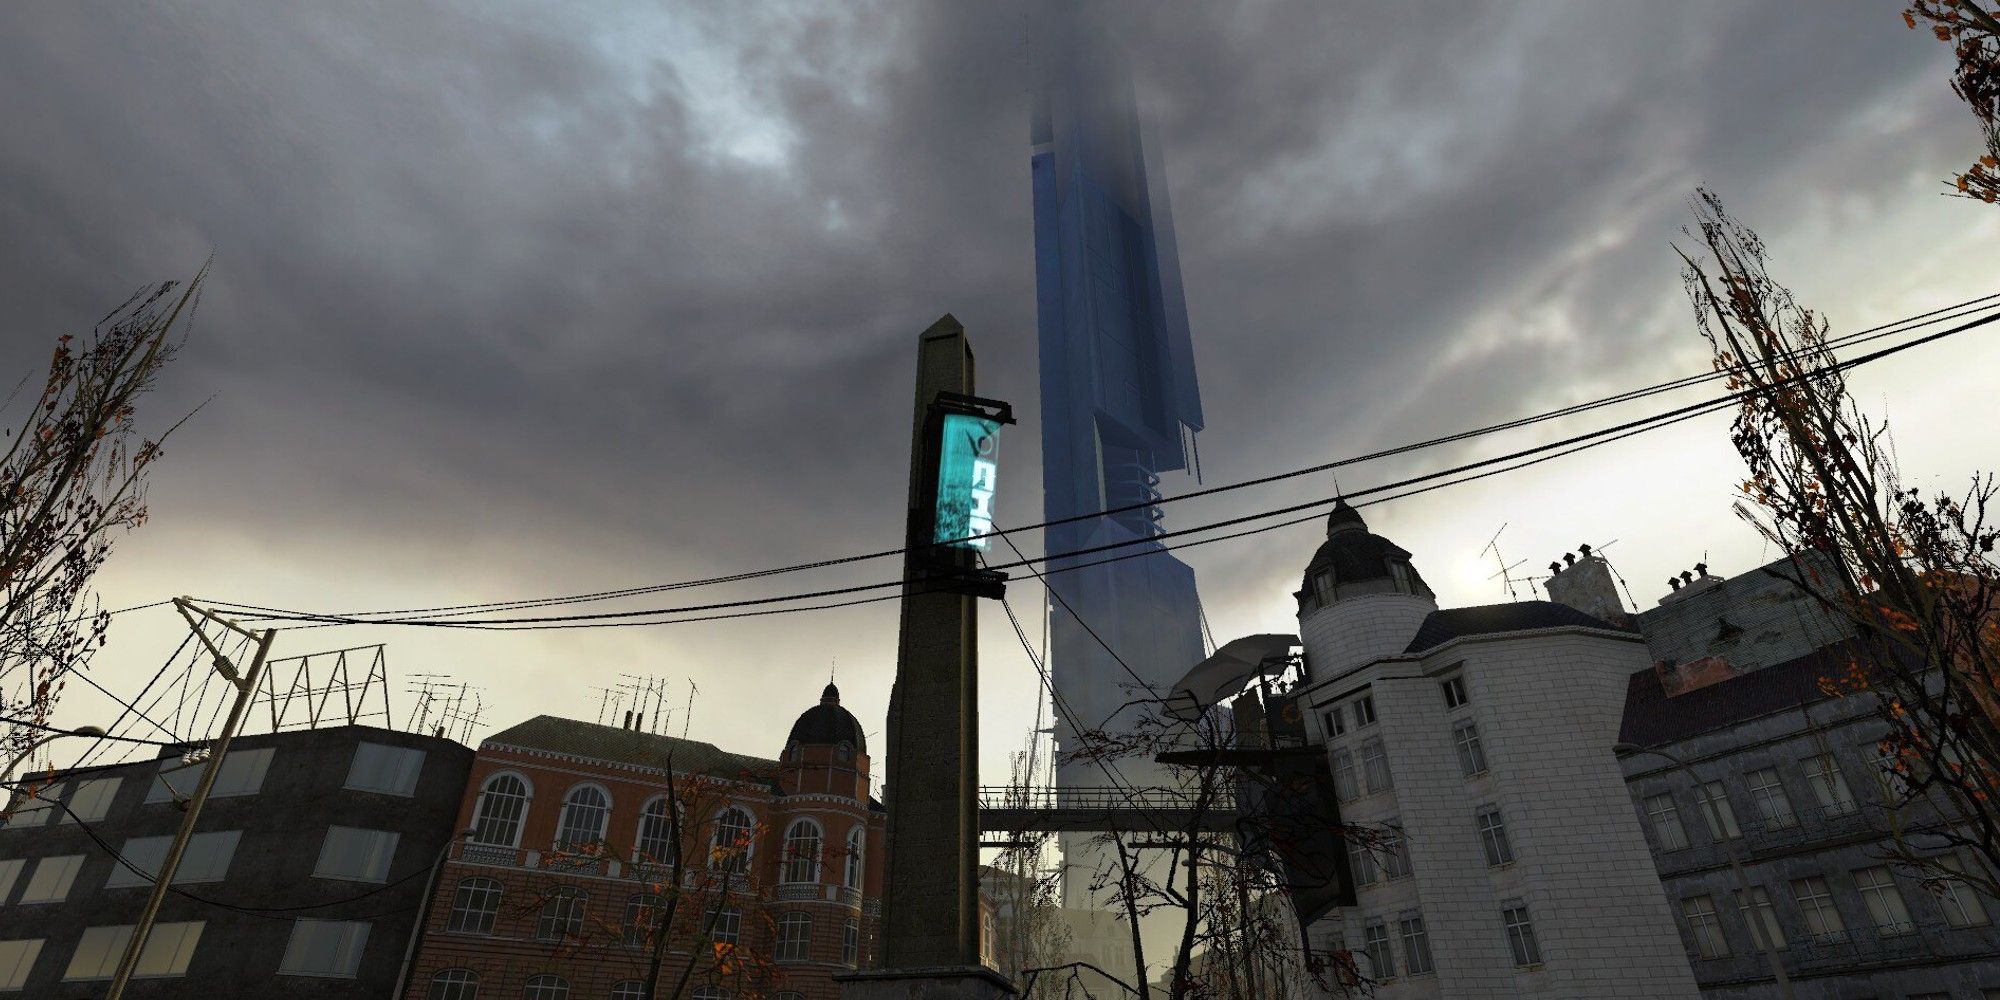 The massive Citadel from Half-Life 2